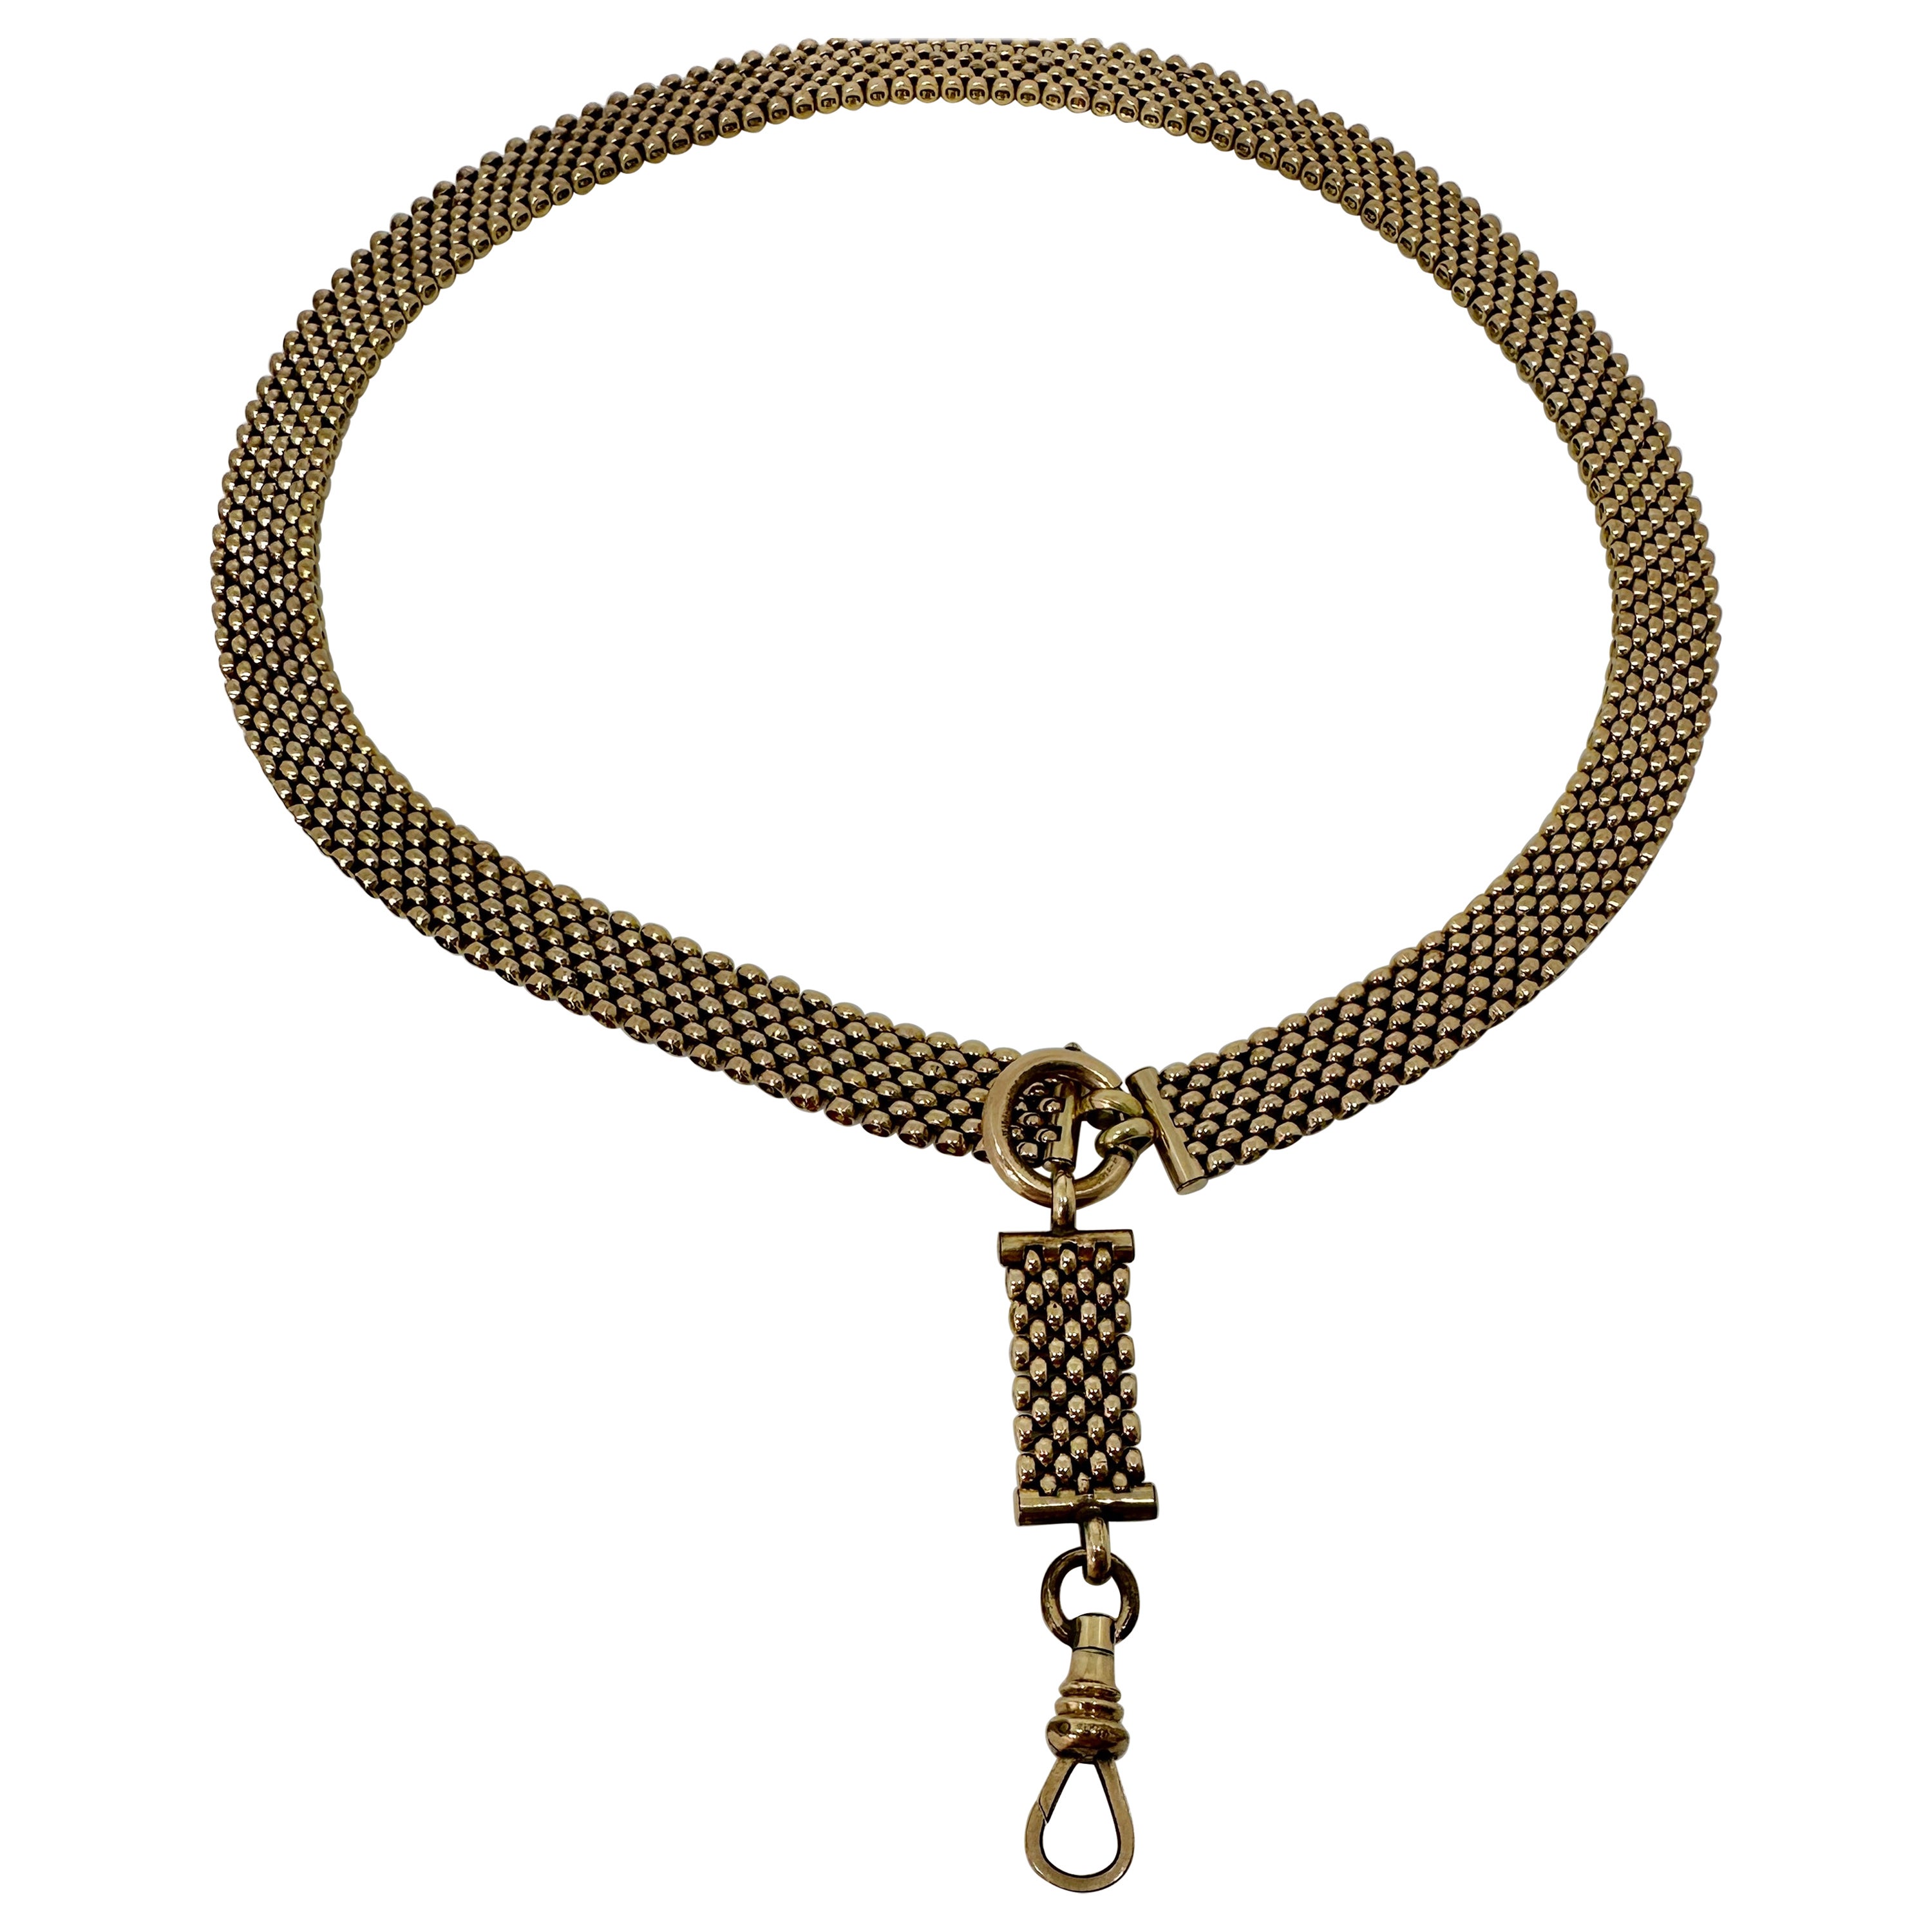 Victorian Book Chain Necklace Antique Dog Clip For Locket Or Pendant circa 1870